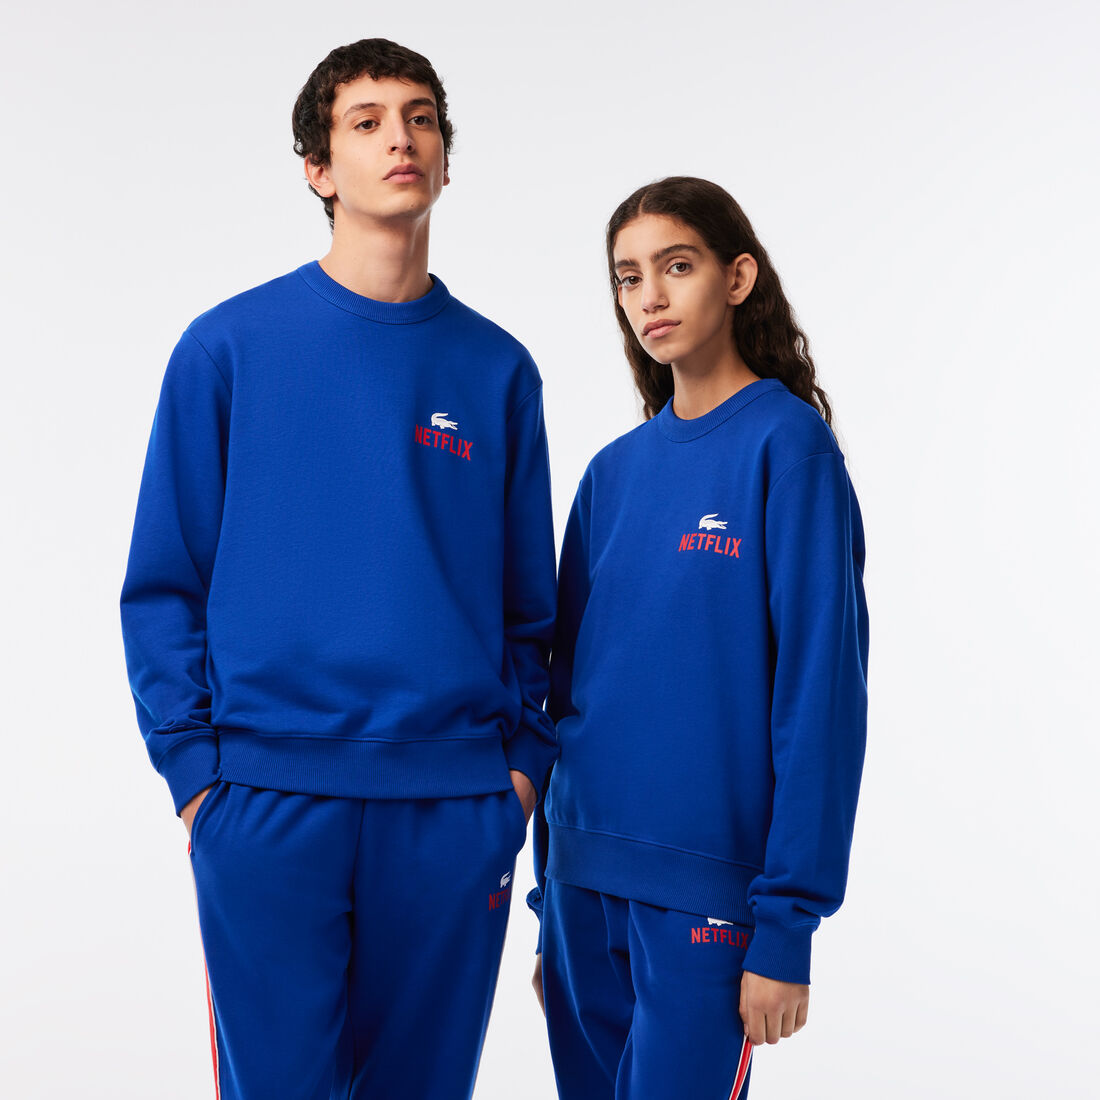 Lacoste X Netflix Round Neck Print Back Sweatshirts Herren Blau | ALOY-81653